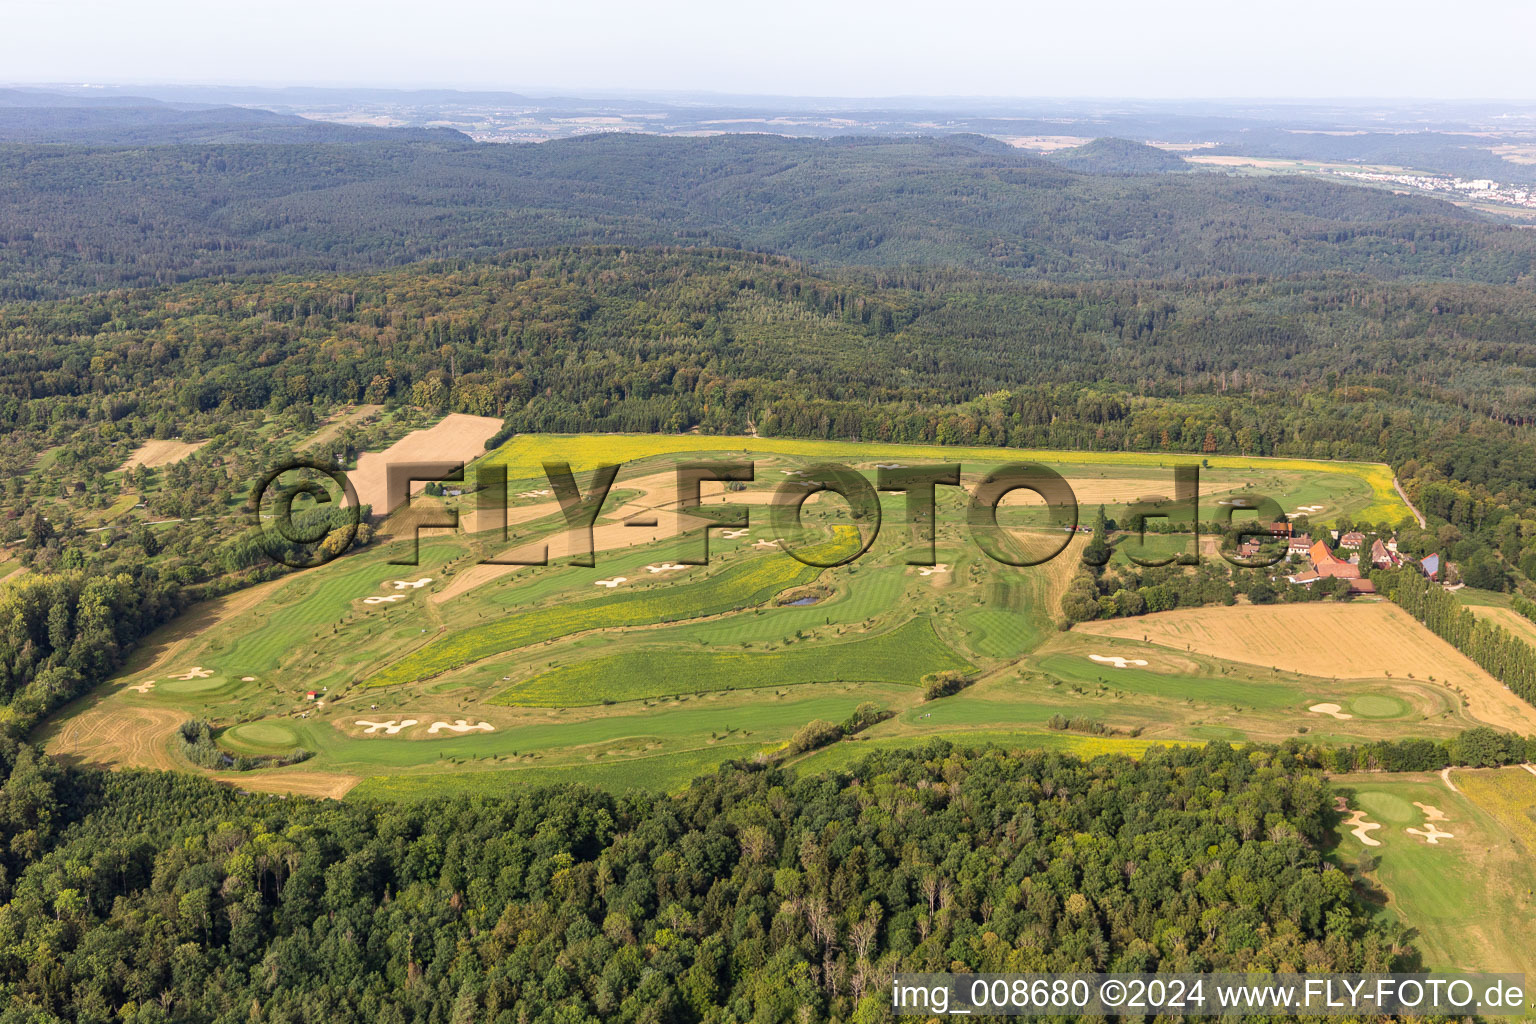 Superficie du terrain de golf Golfclub Schloss Kressbach à Kressbach dans le département Bade-Wurtemberg, Allemagne vue d'en haut